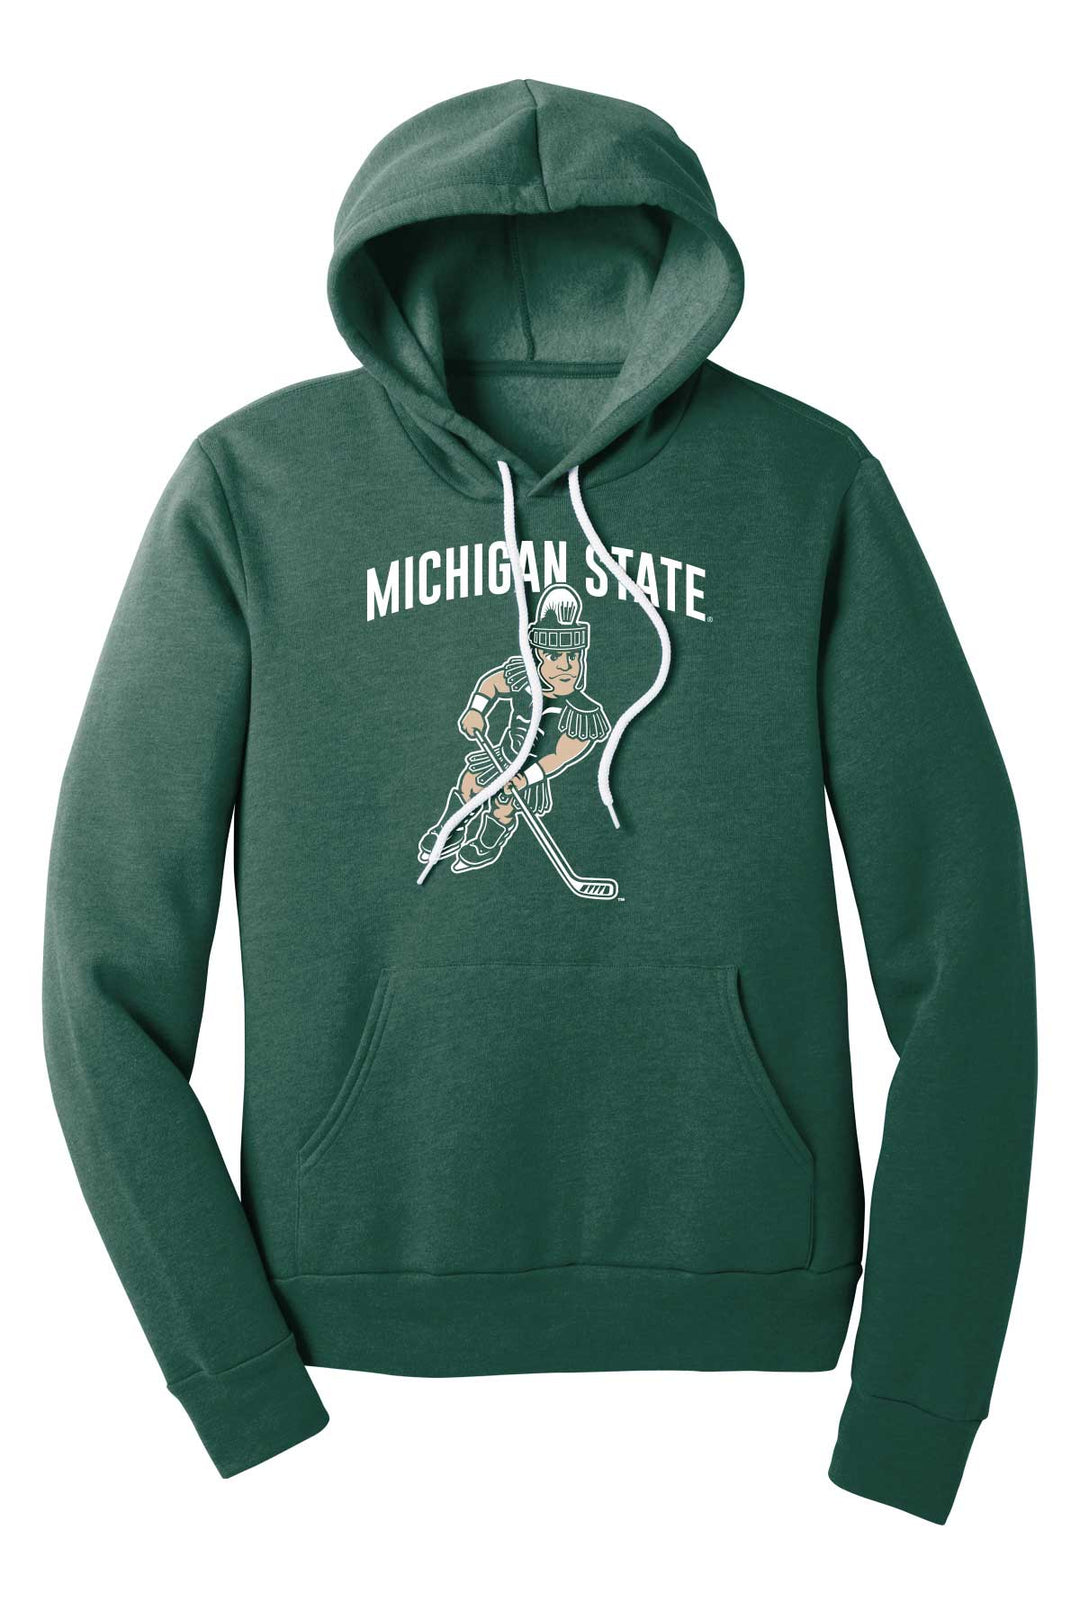 Michigan State Hockey Hoodie from Nudge Printing